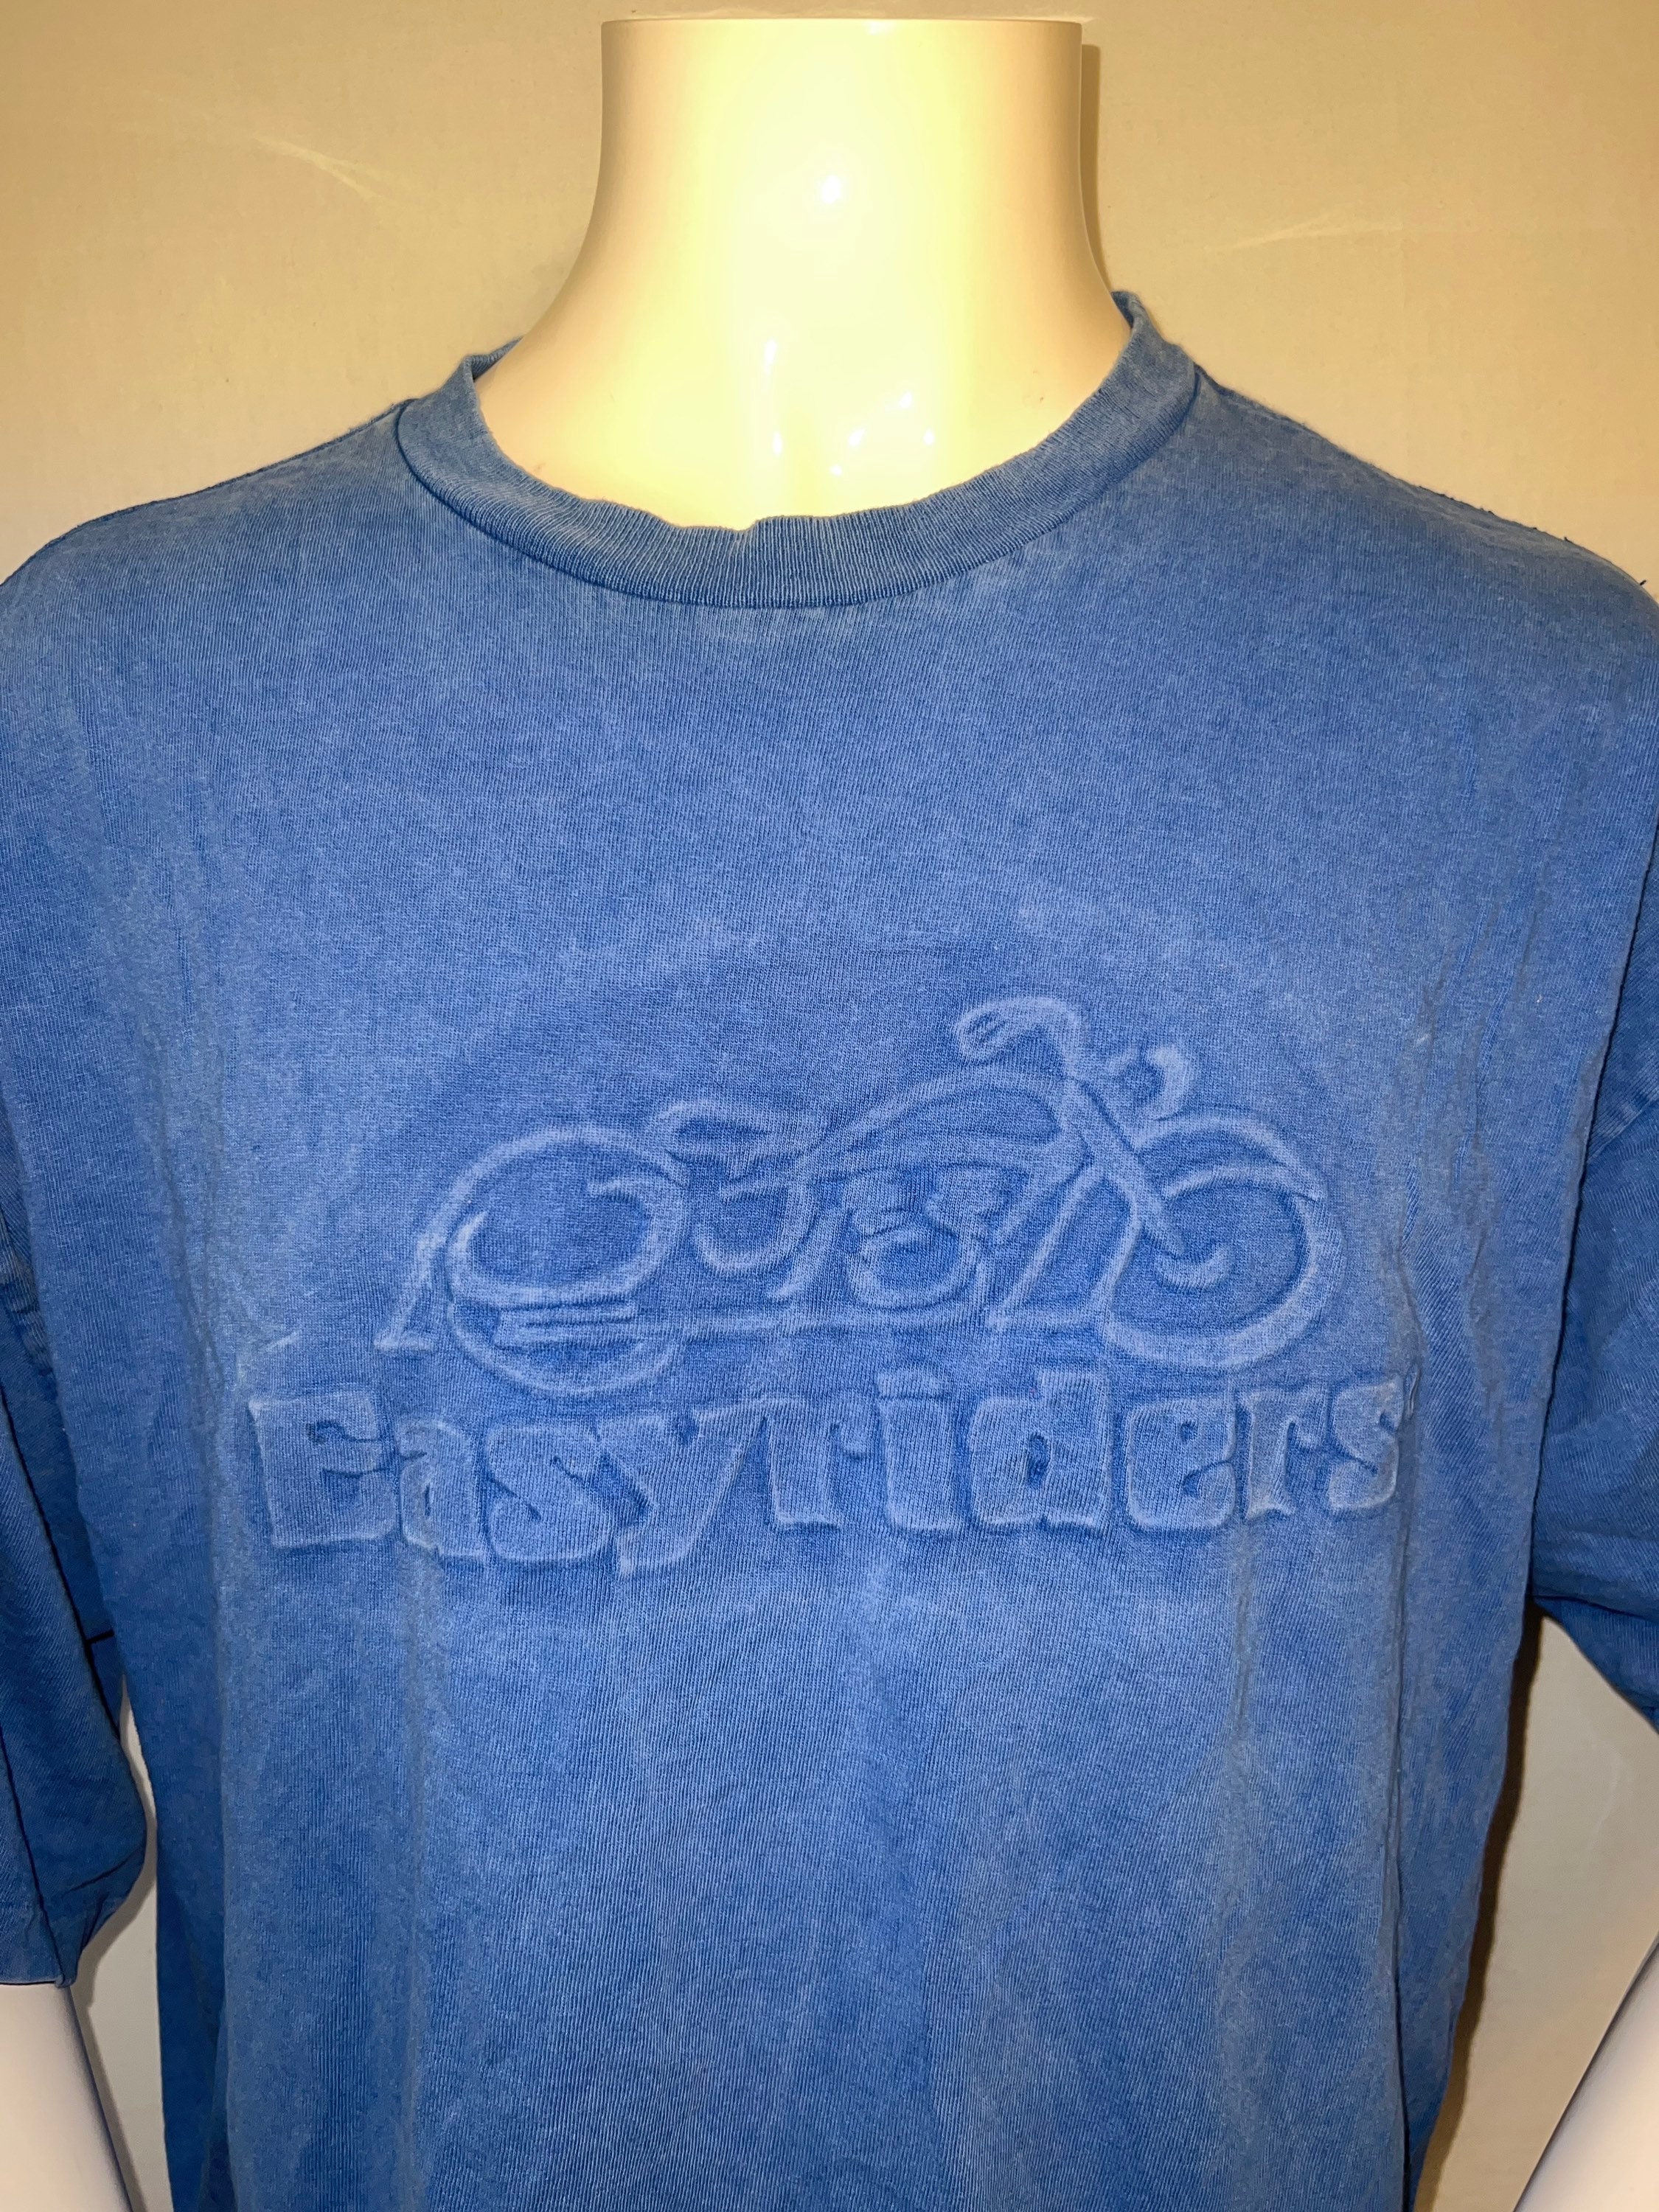 Vintage Easyriders Motorcycle Tee Shirt 90’s Thrashed Distressed XL